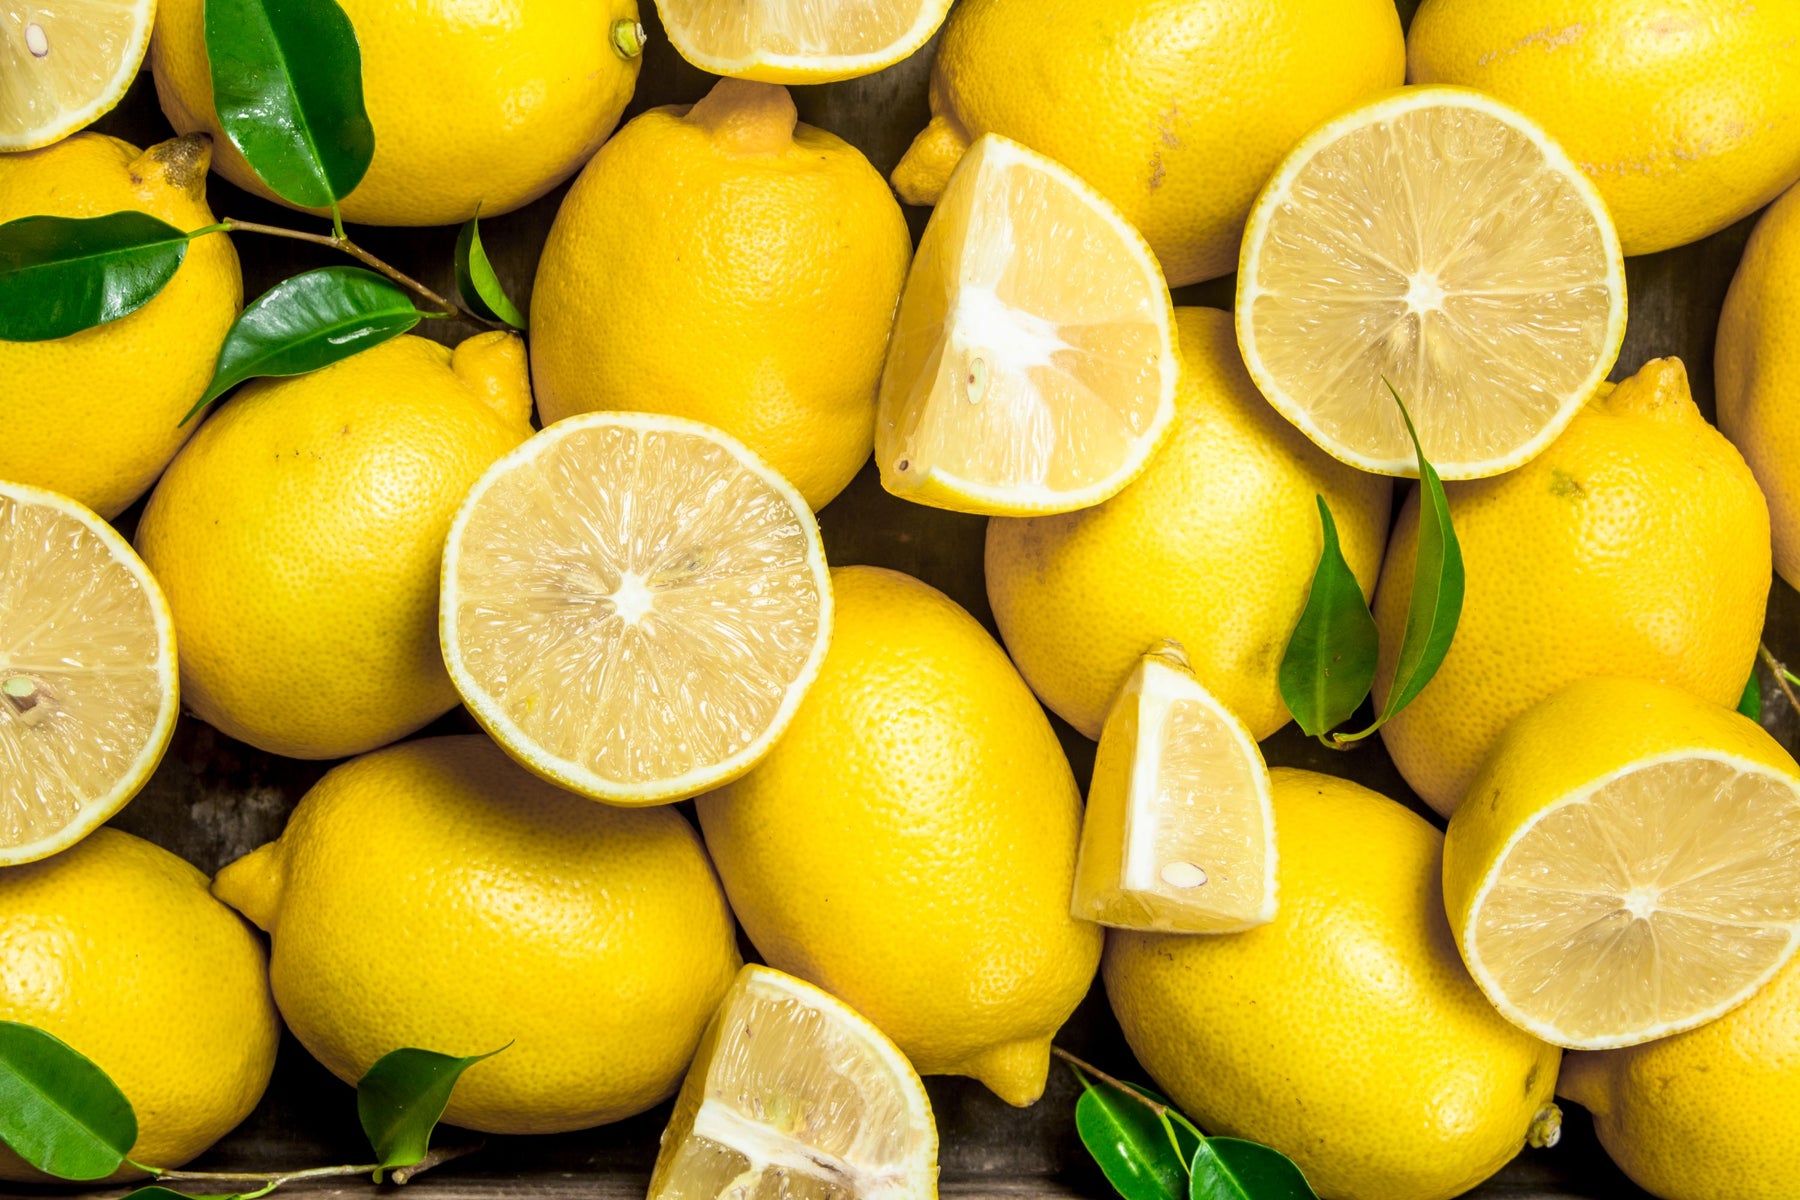 Lemons: The Champion Citrus